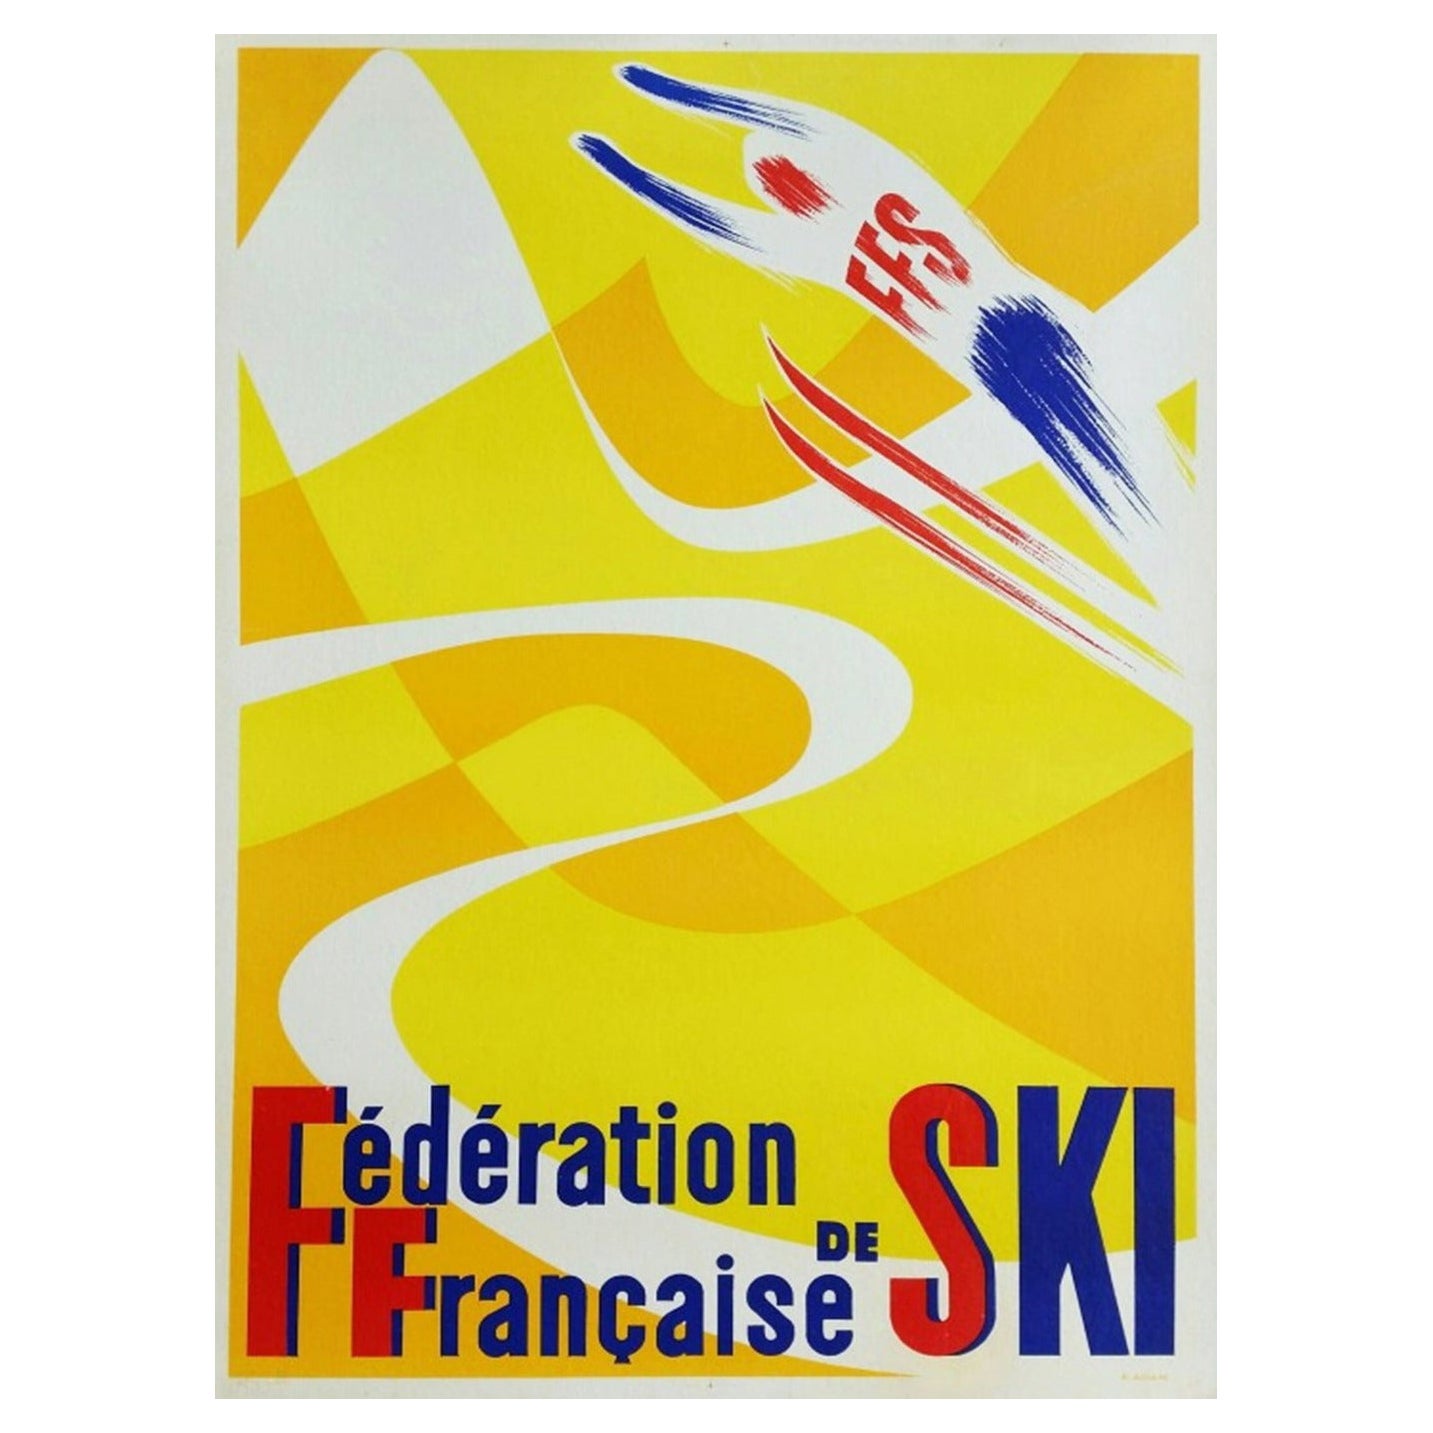 1950 Federation Francaise De Ski Original Vintage Poster For Sale